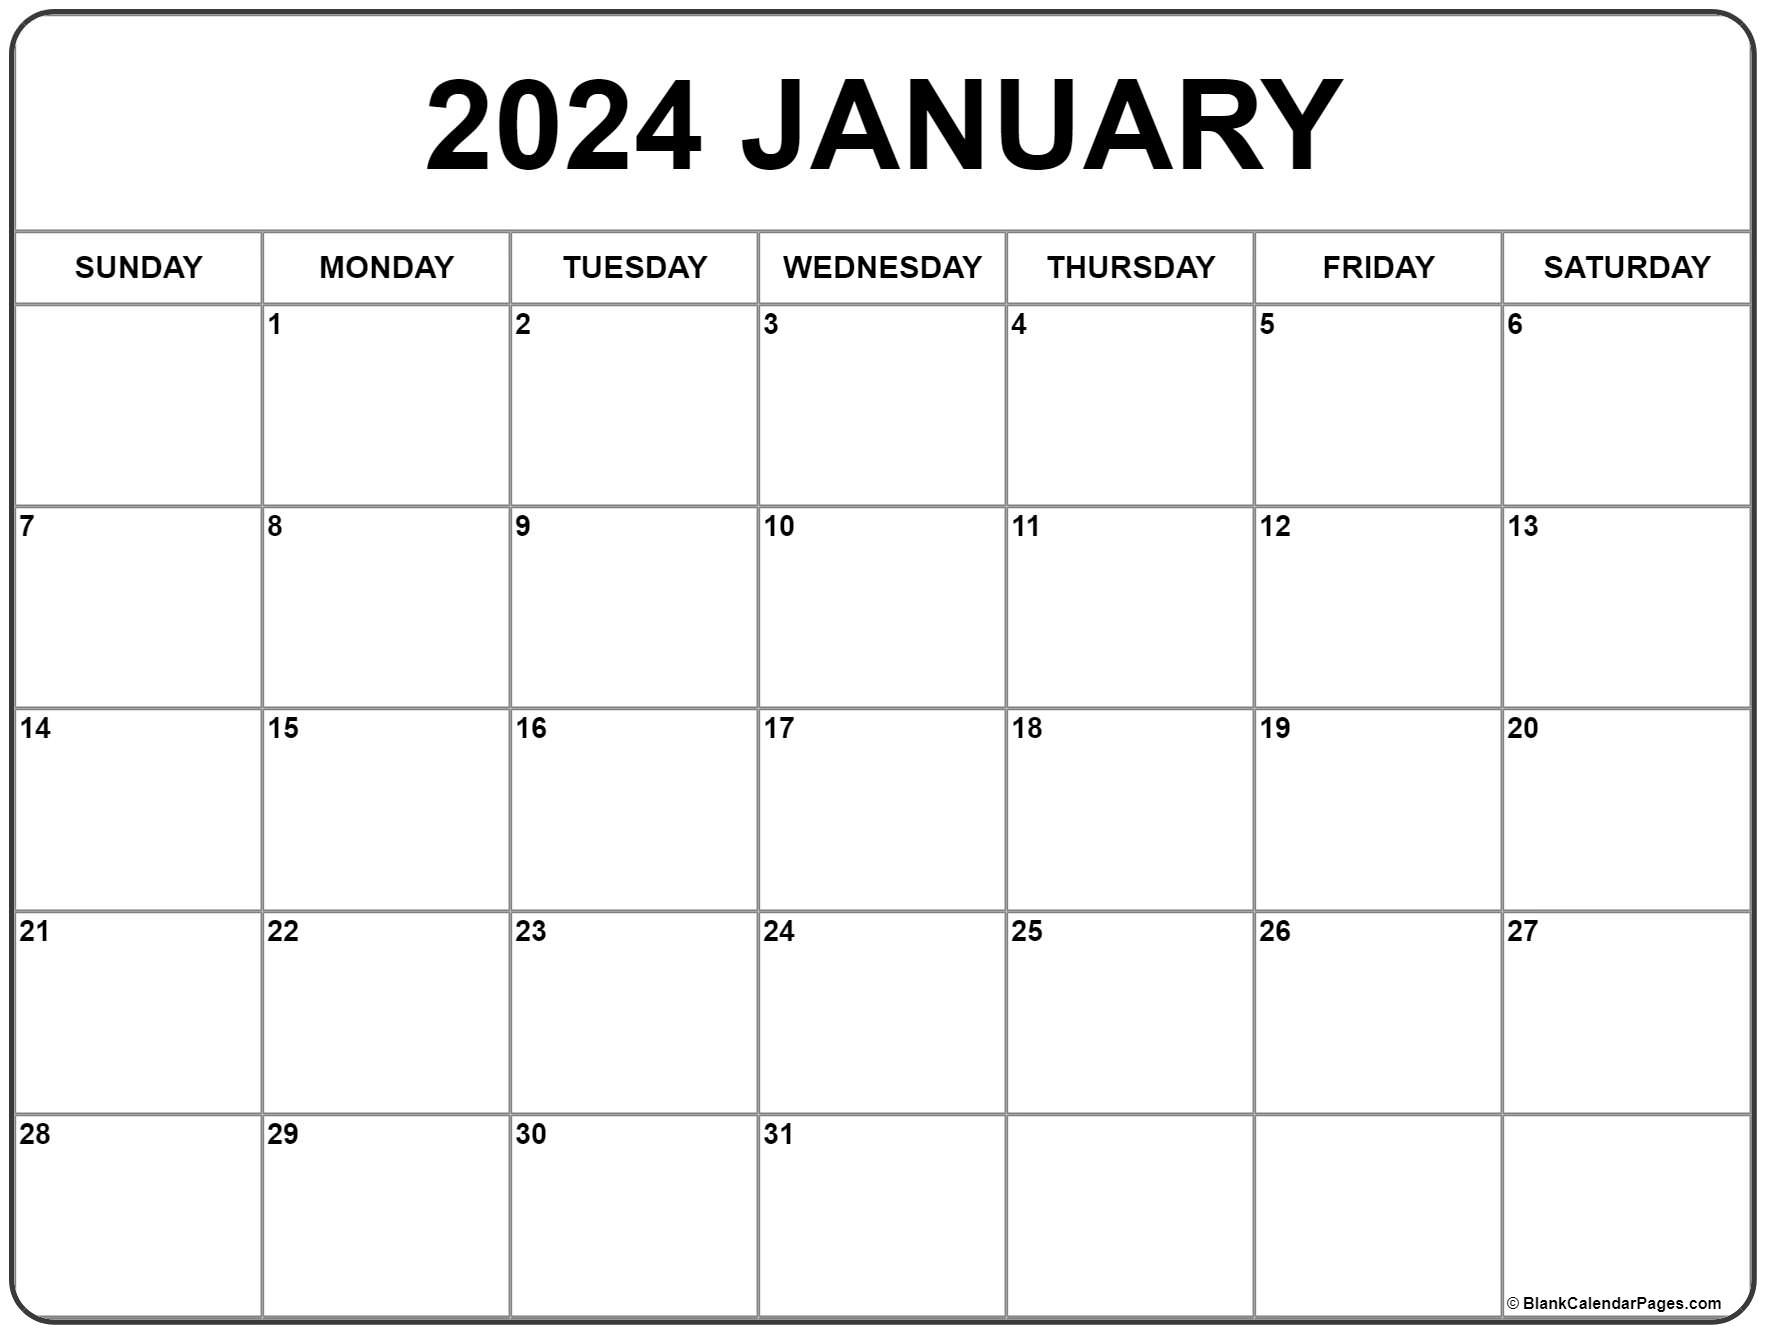 January 2024 Calendar | Free Printable Calendar for Free Printable Jan 2024 Calendar